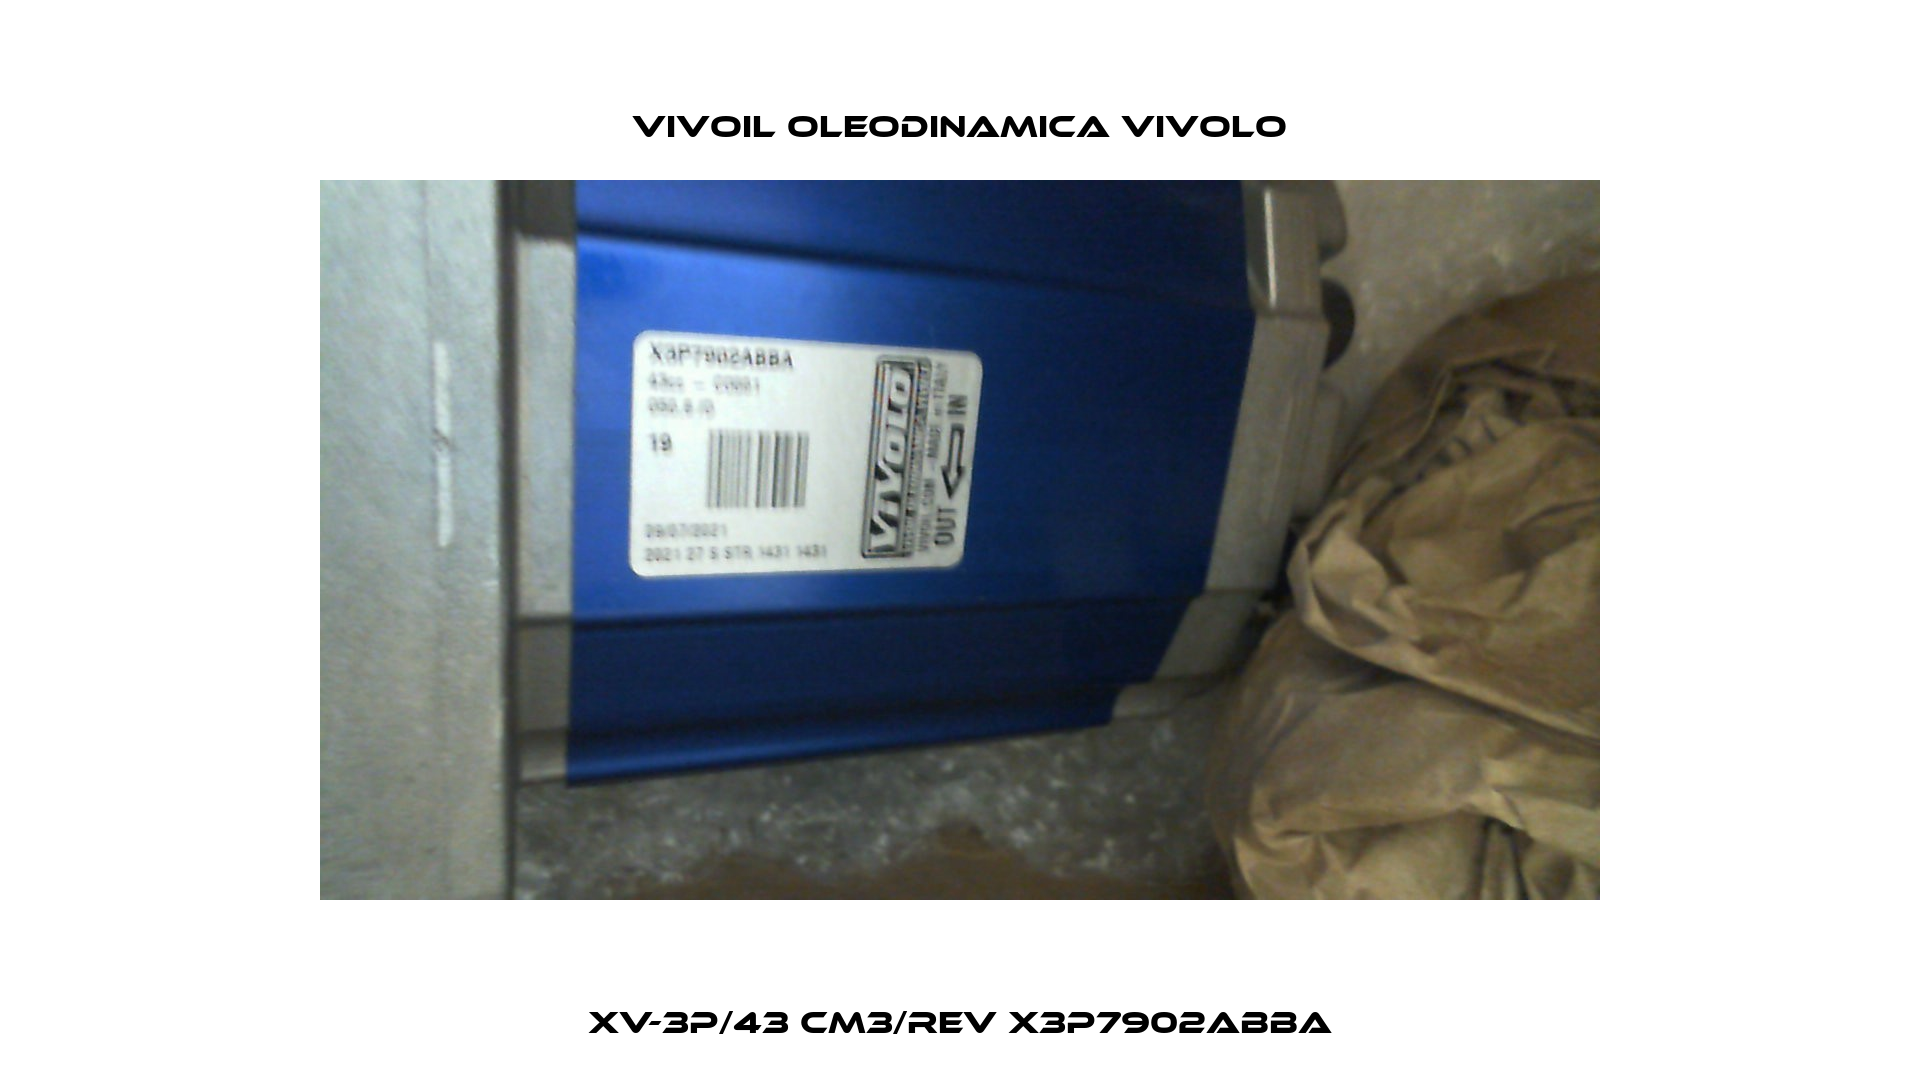 XV-3P/43 cm3/rev X3P7902ABBA Vivoil Oleodinamica Vivolo